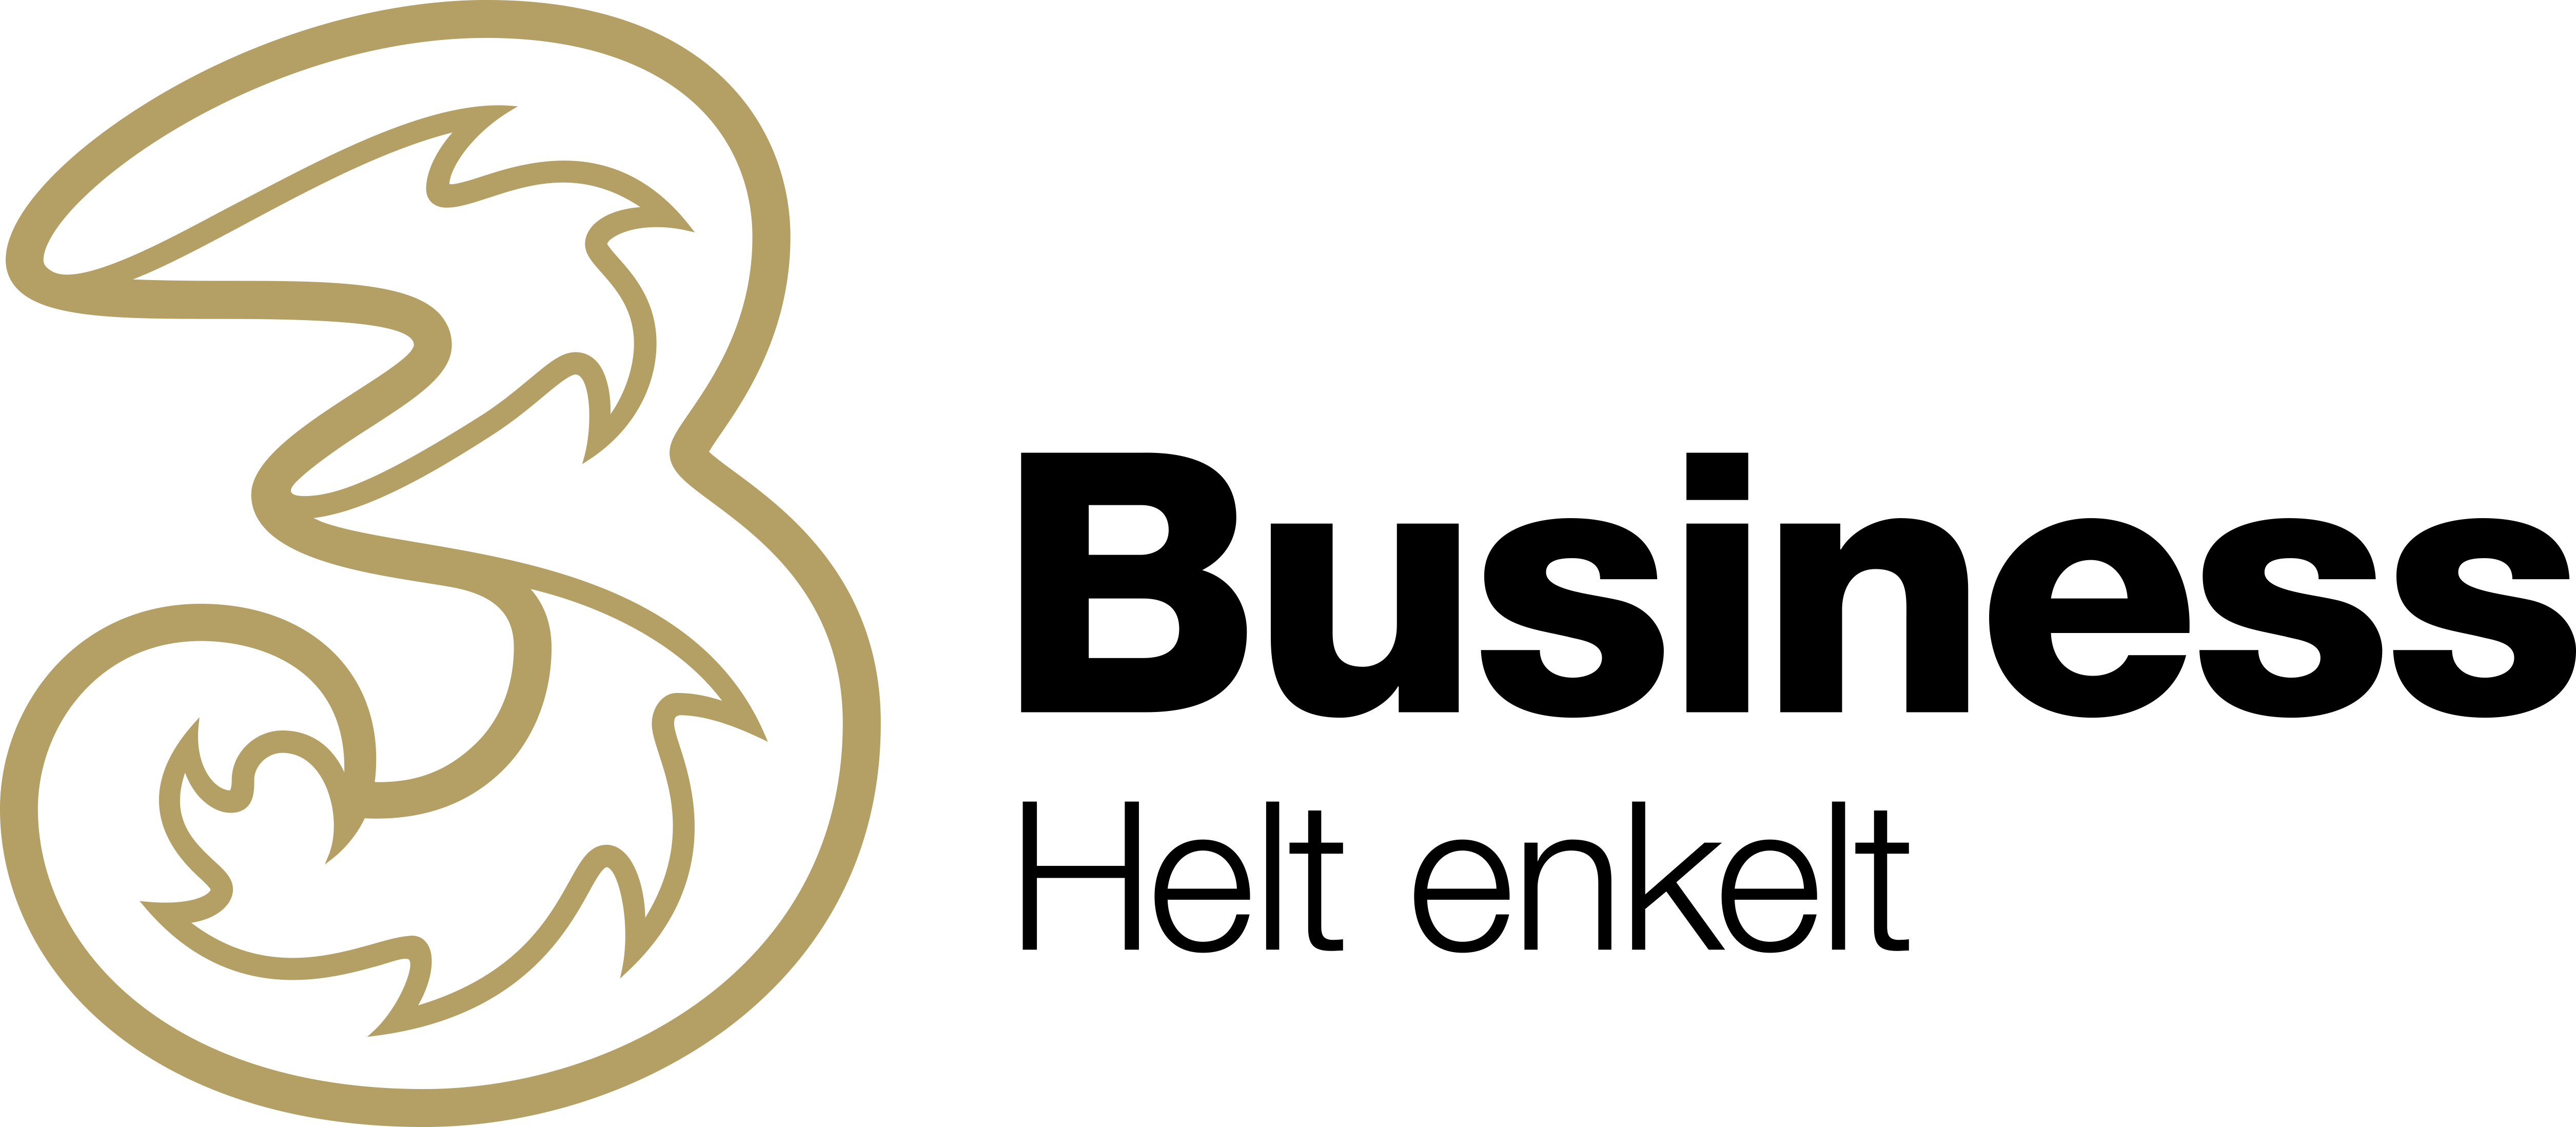 3 Business logo